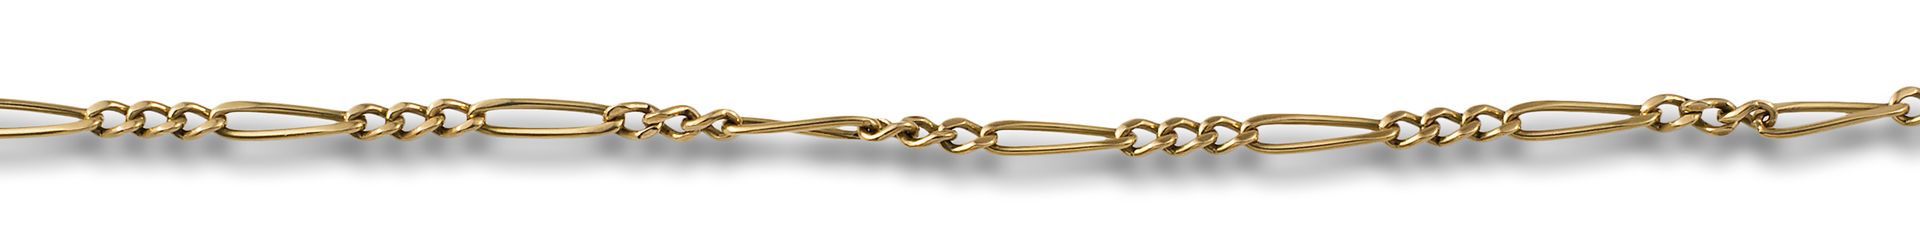 YELLOW GOLD BRACELET 18kt yellow gold openwork link bracelet. Weight: 7.65 gr. .&hellip;